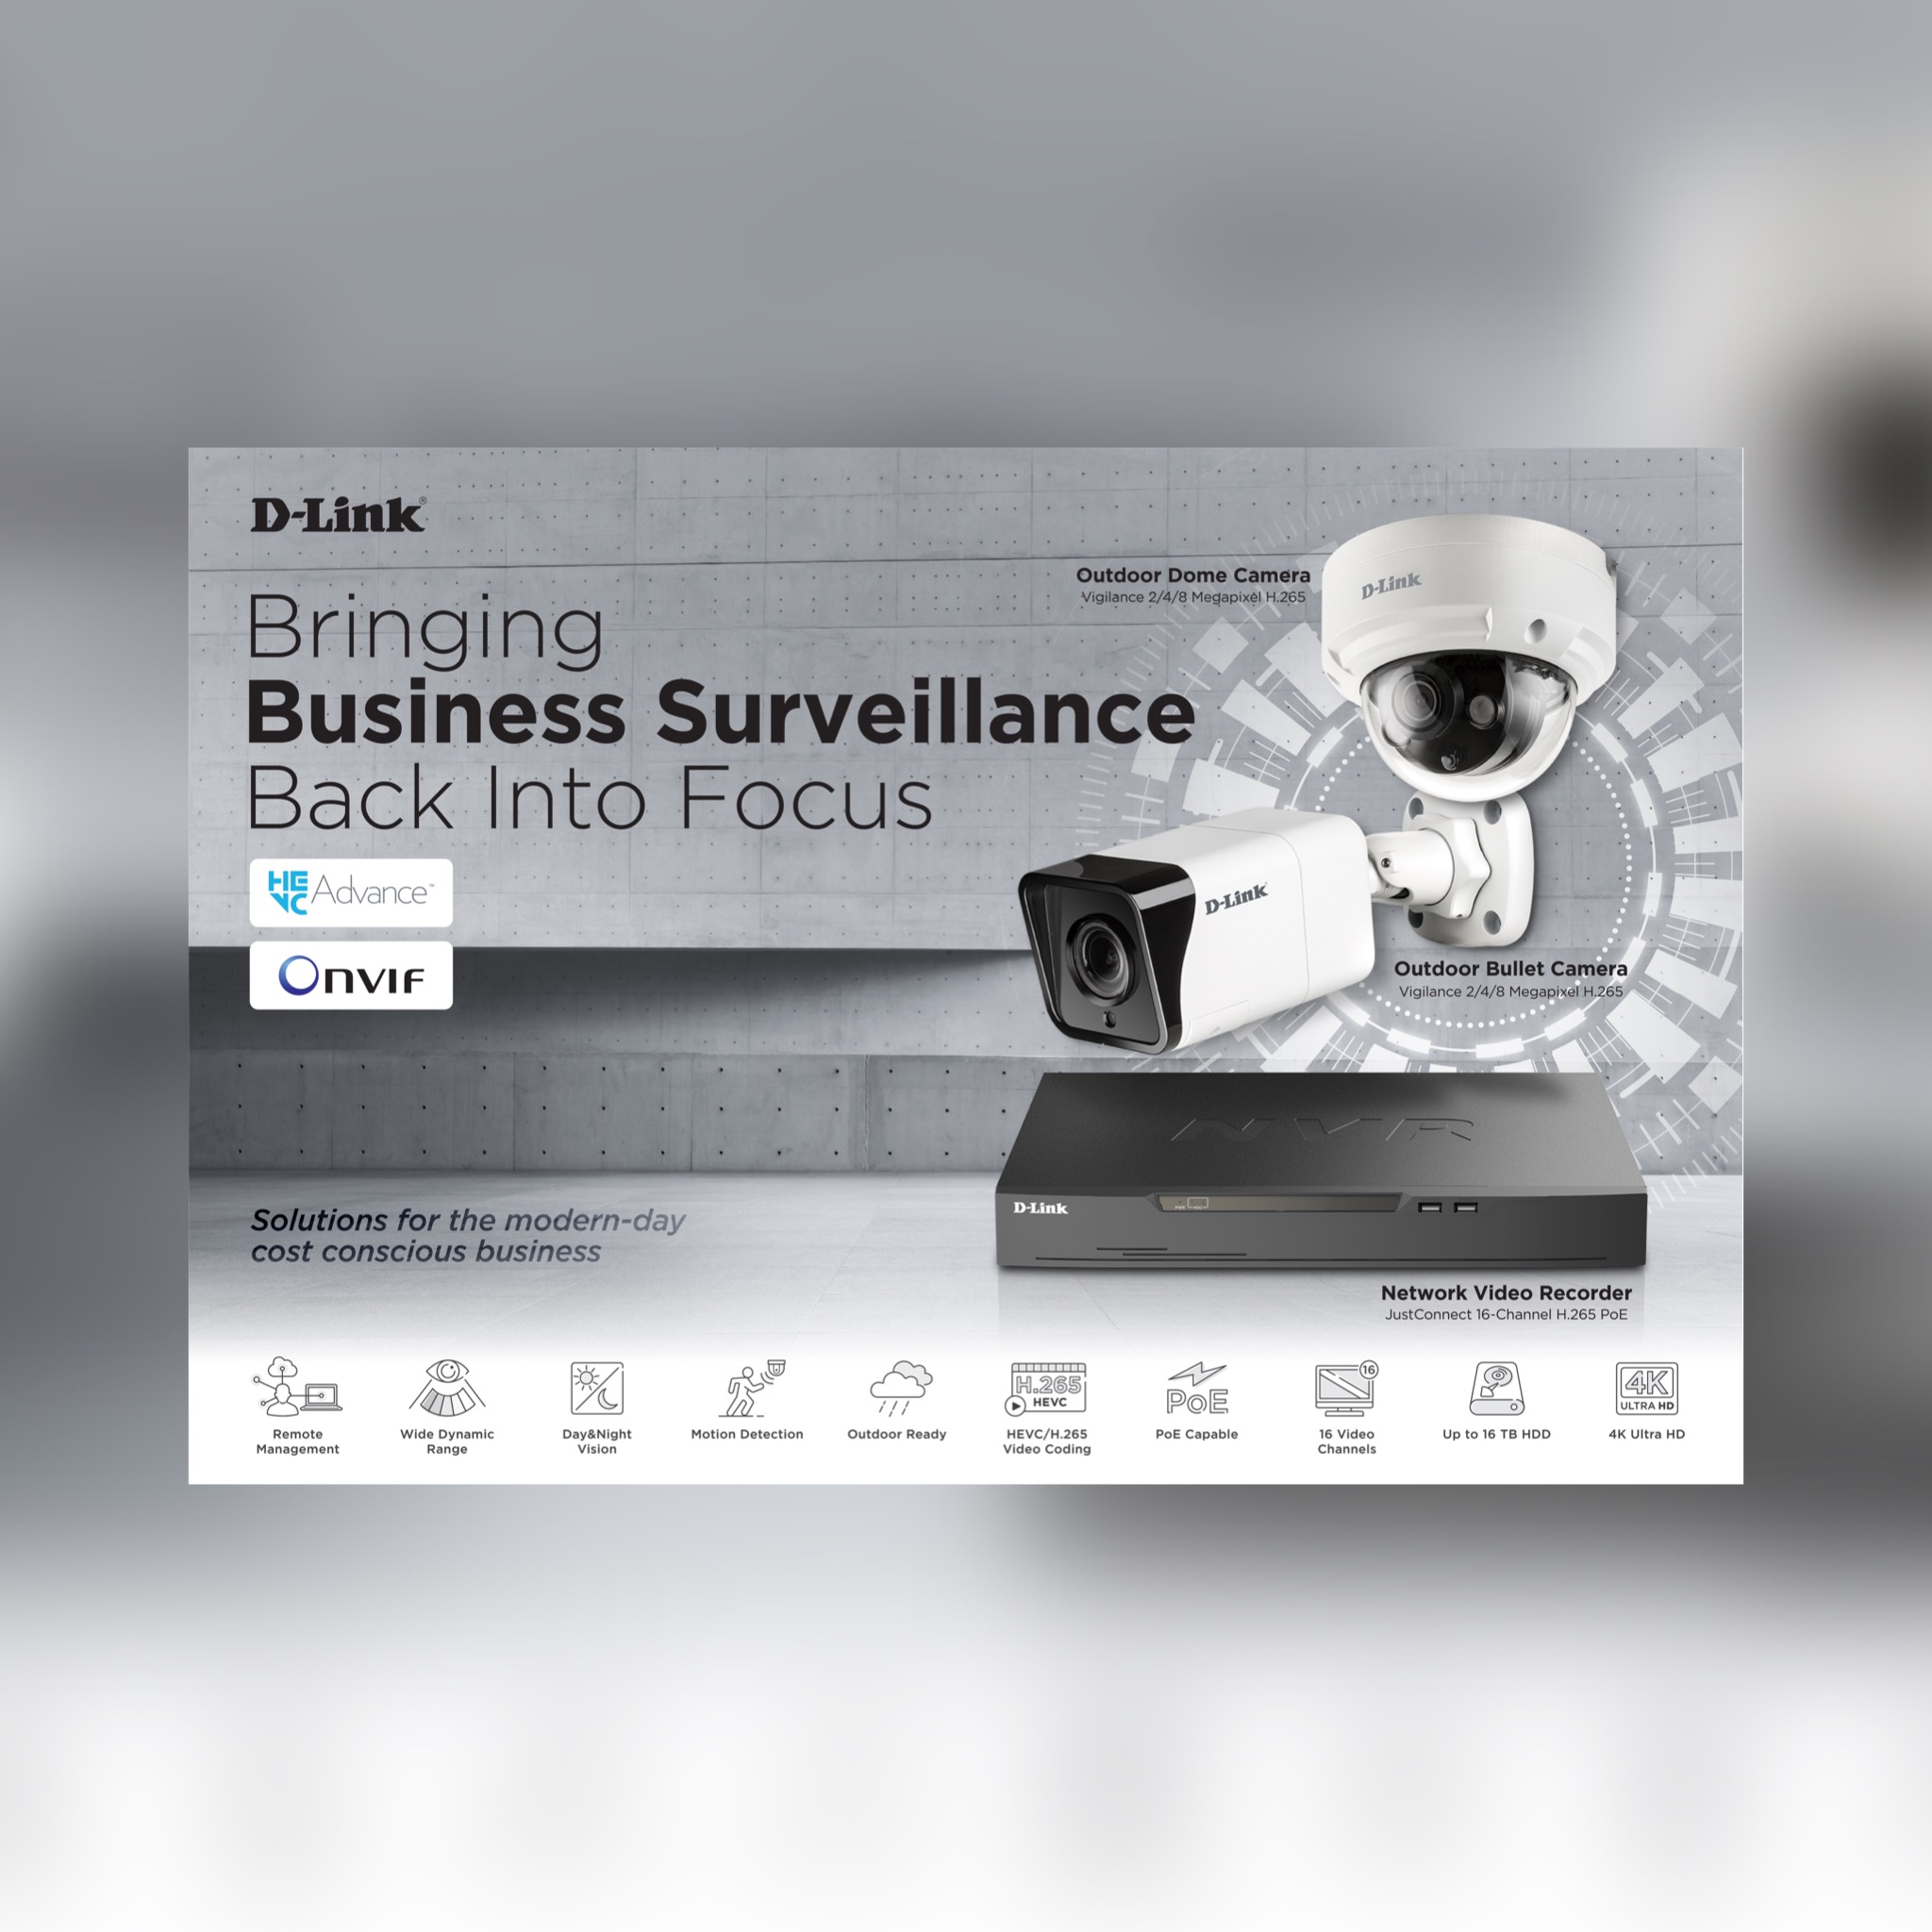 D-Link’s new Vigilance Series Solutions boast reliable, high-resolution business surveillance